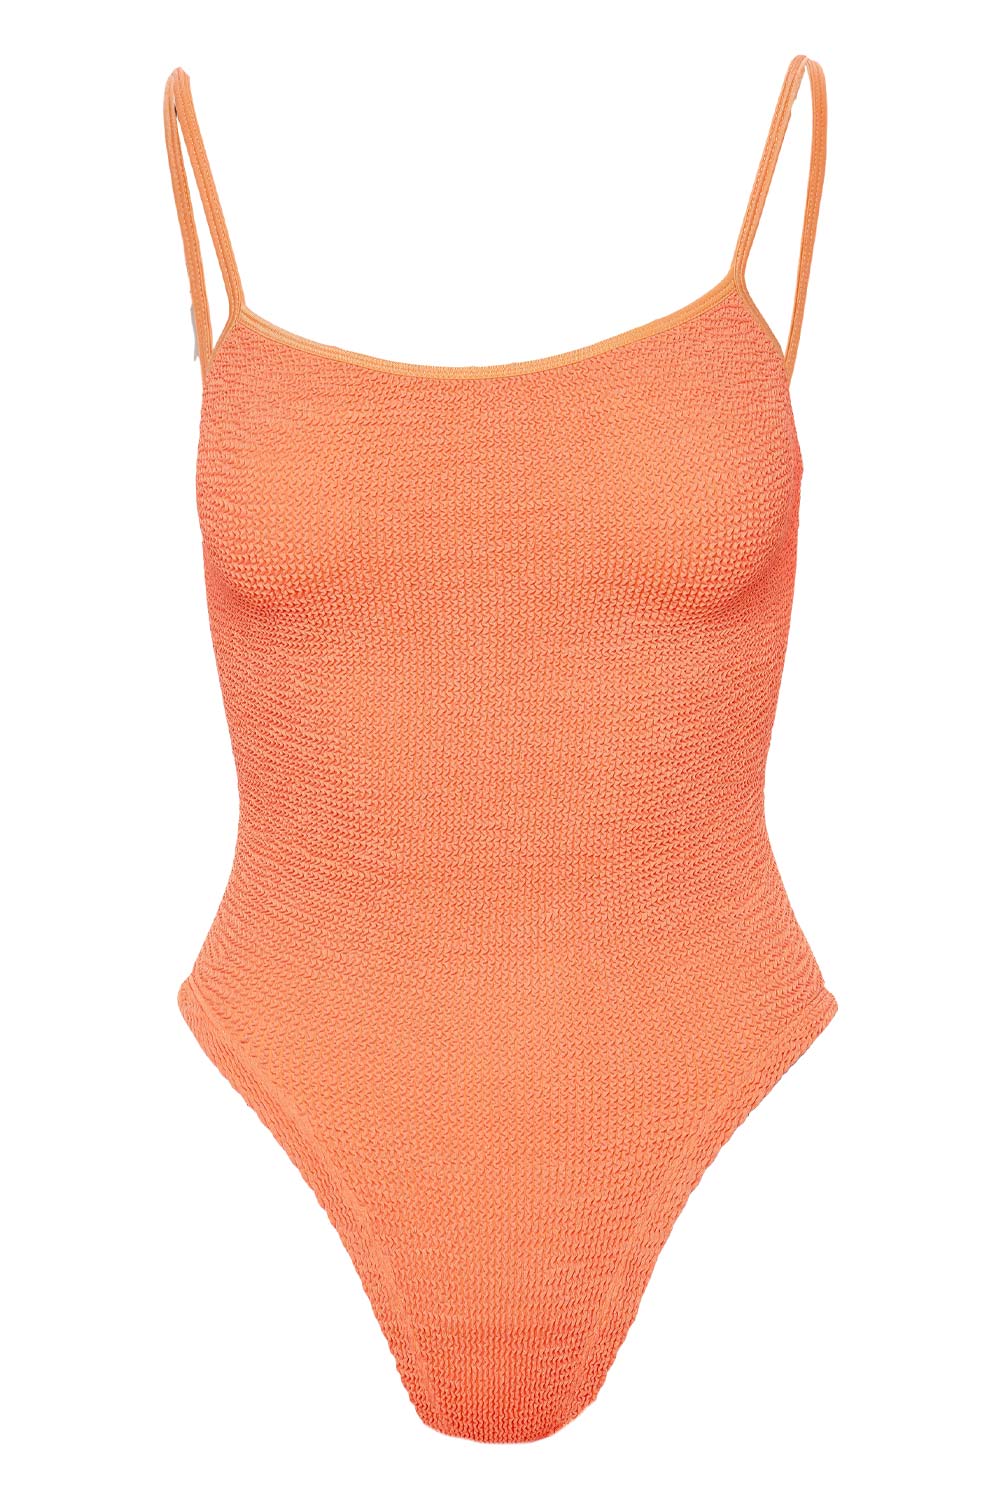 Hunza G Pamela Orange One Piece Swimsuit